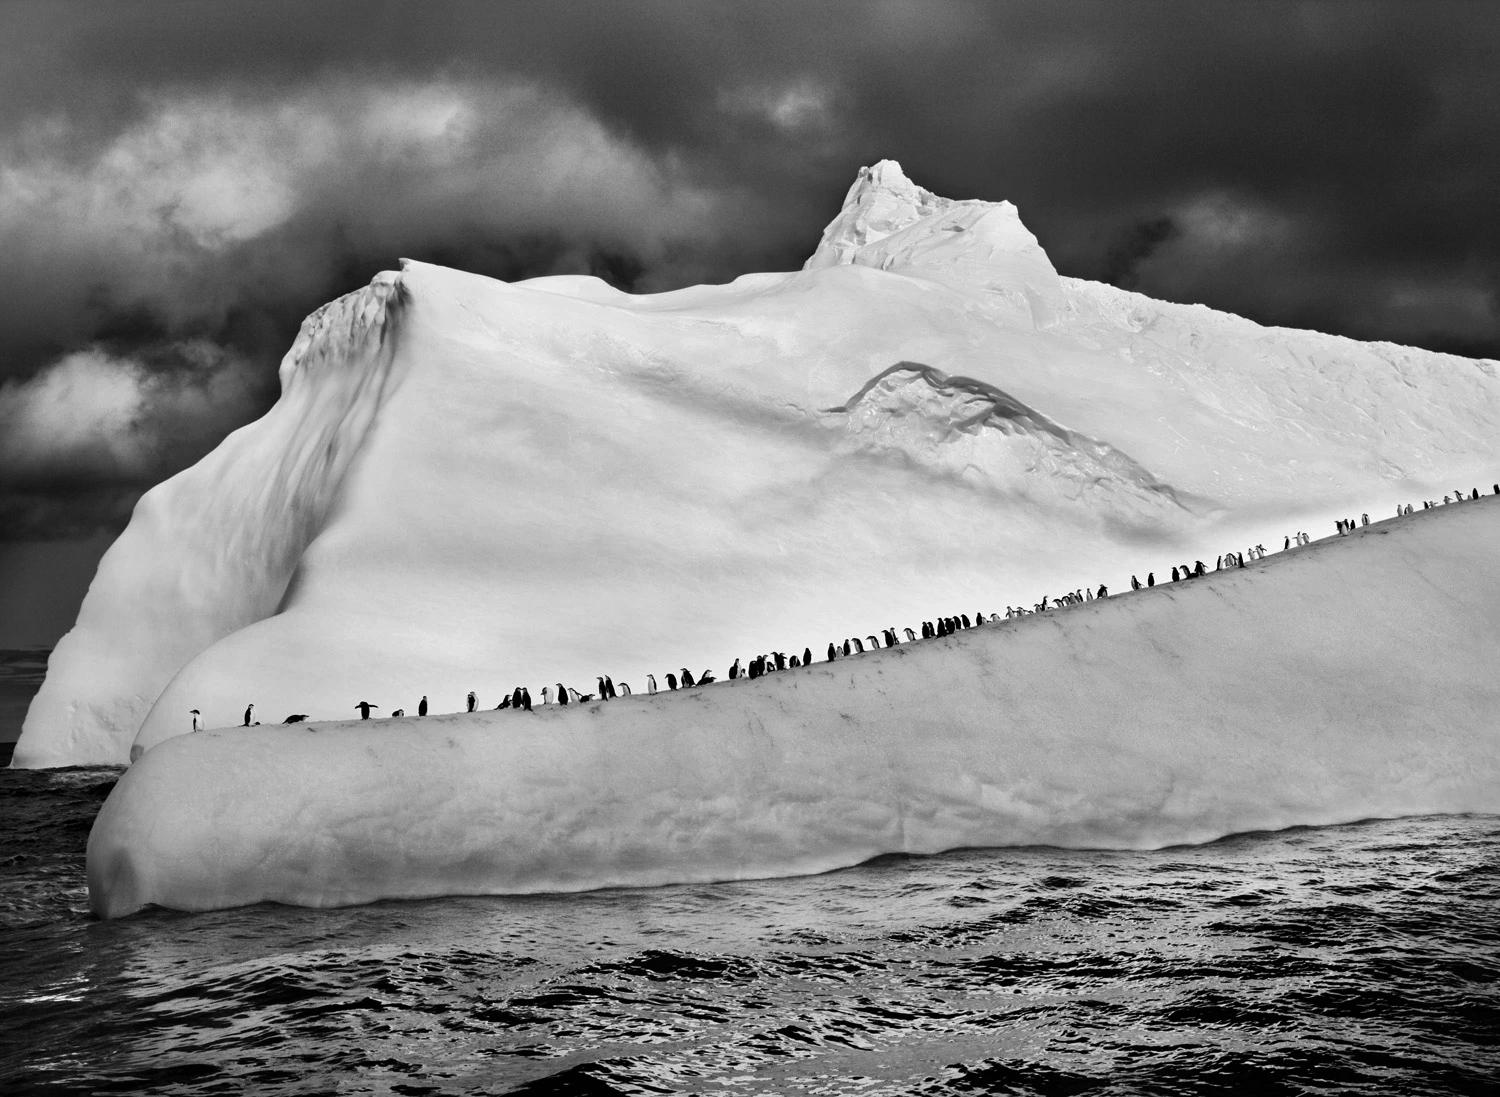 Sebastião Salgado Black and White Photograph - Chinstrap Penguins on an Iceberg, South Sandwich Islands